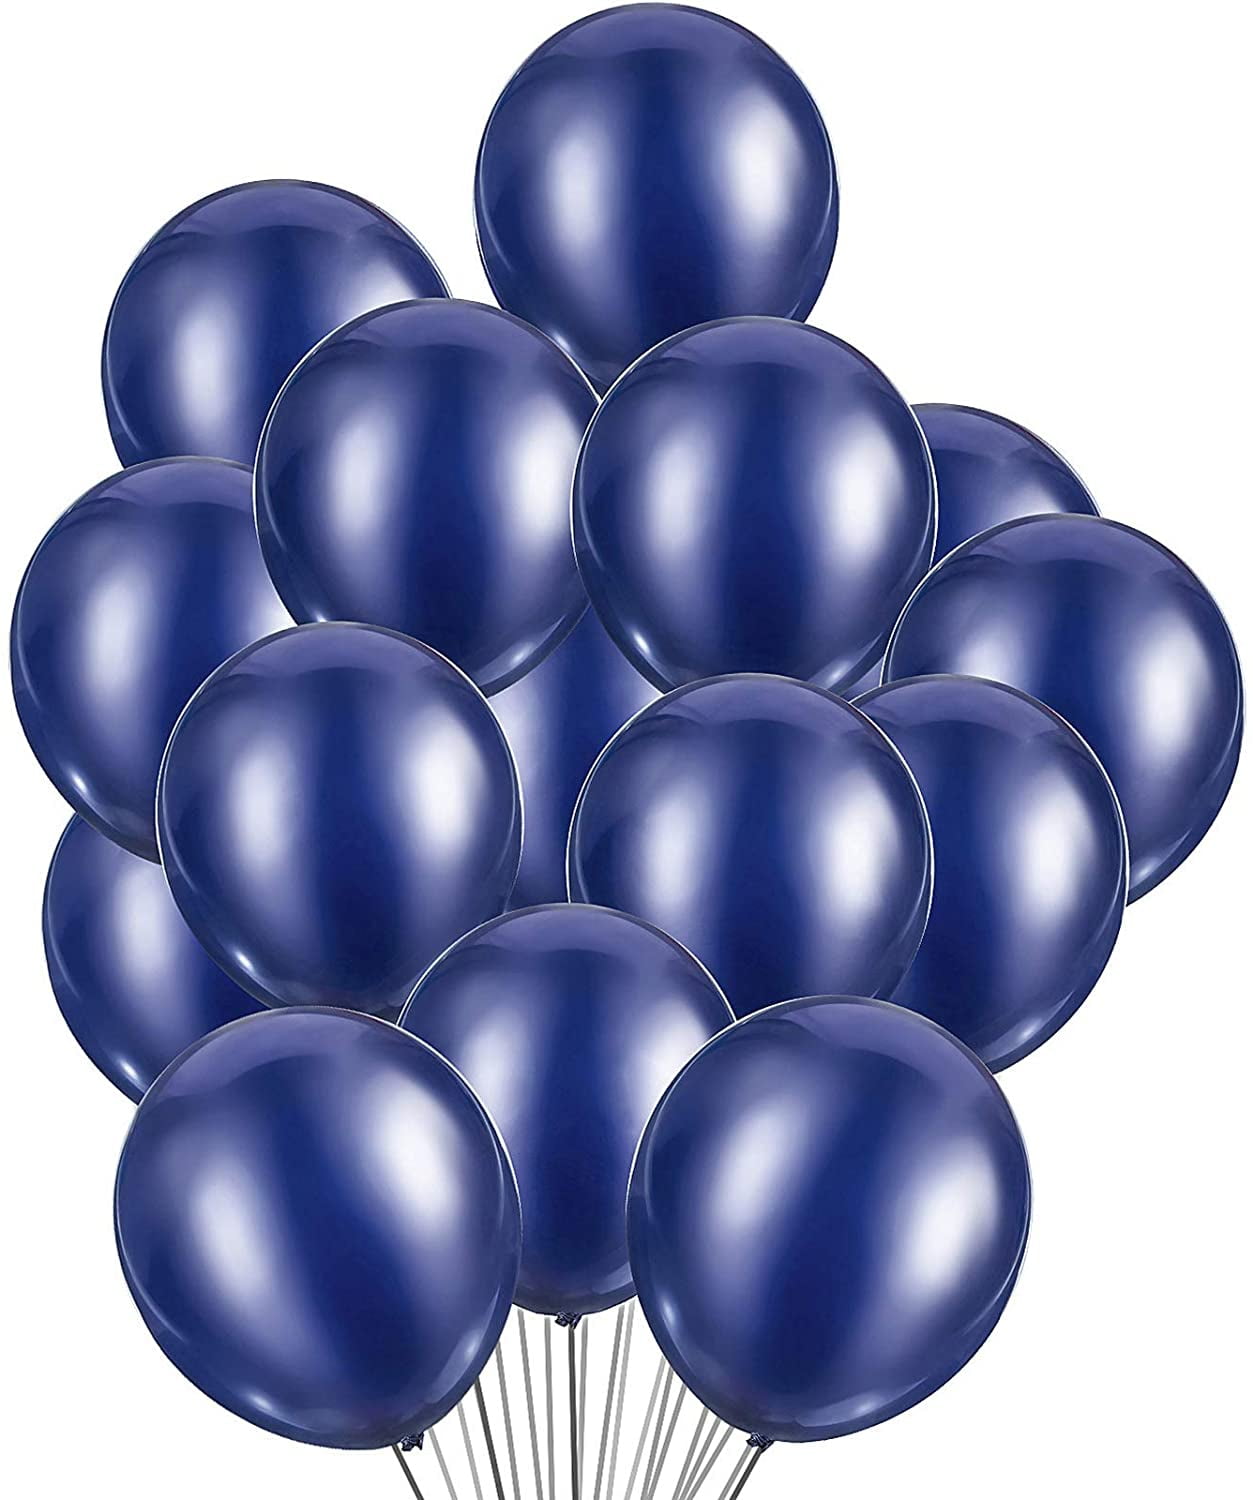 Details about   10 pcs X 10" PEARL Metallic BALLOONS BALLON helium Party BALOON Birthday 